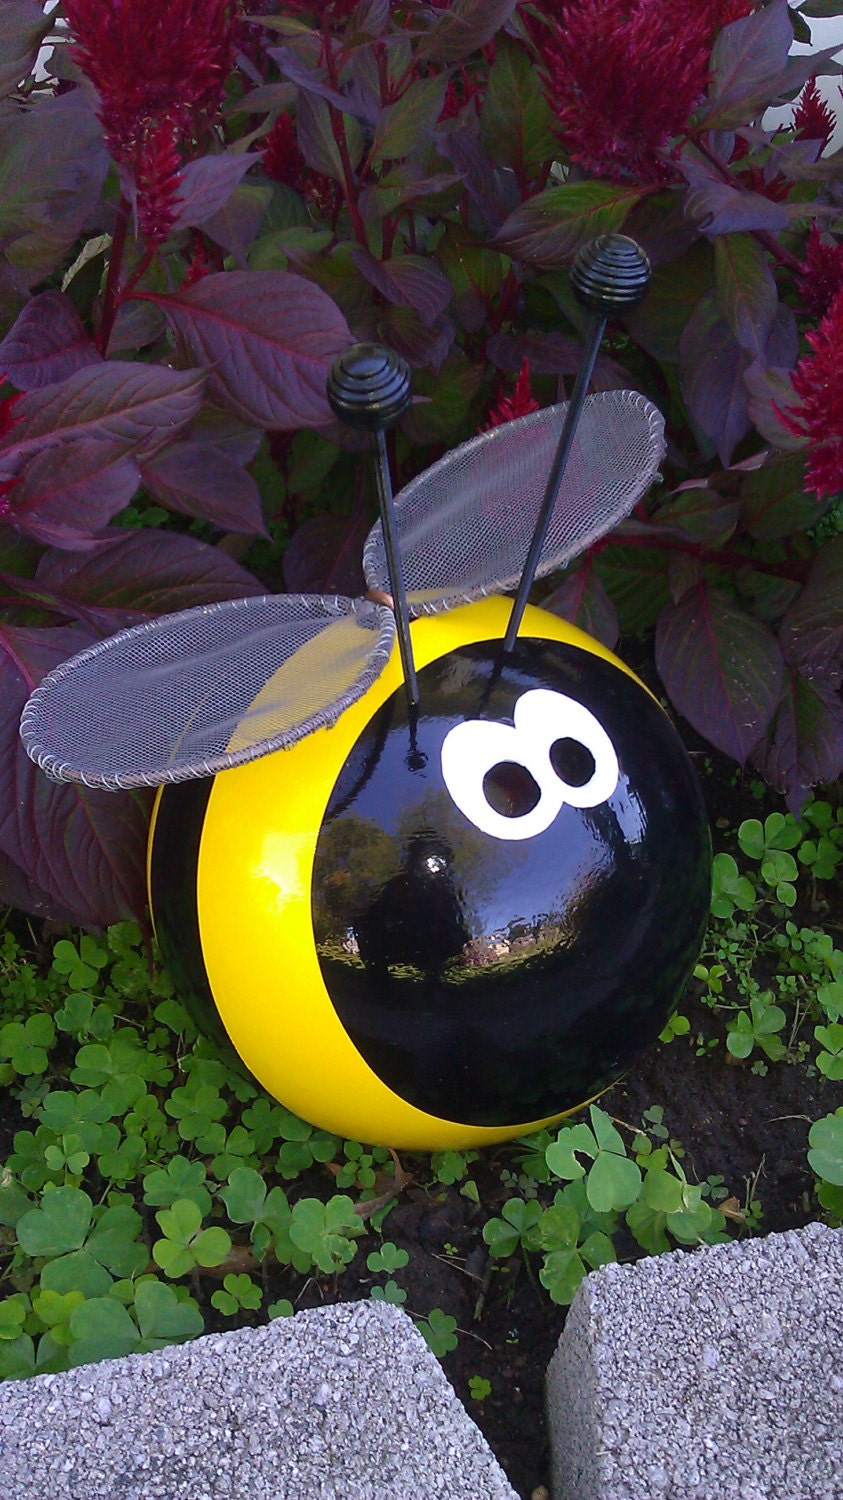 Bumble Bee Bowling Ball Garden Ornament by CraftMeUpSomeFun